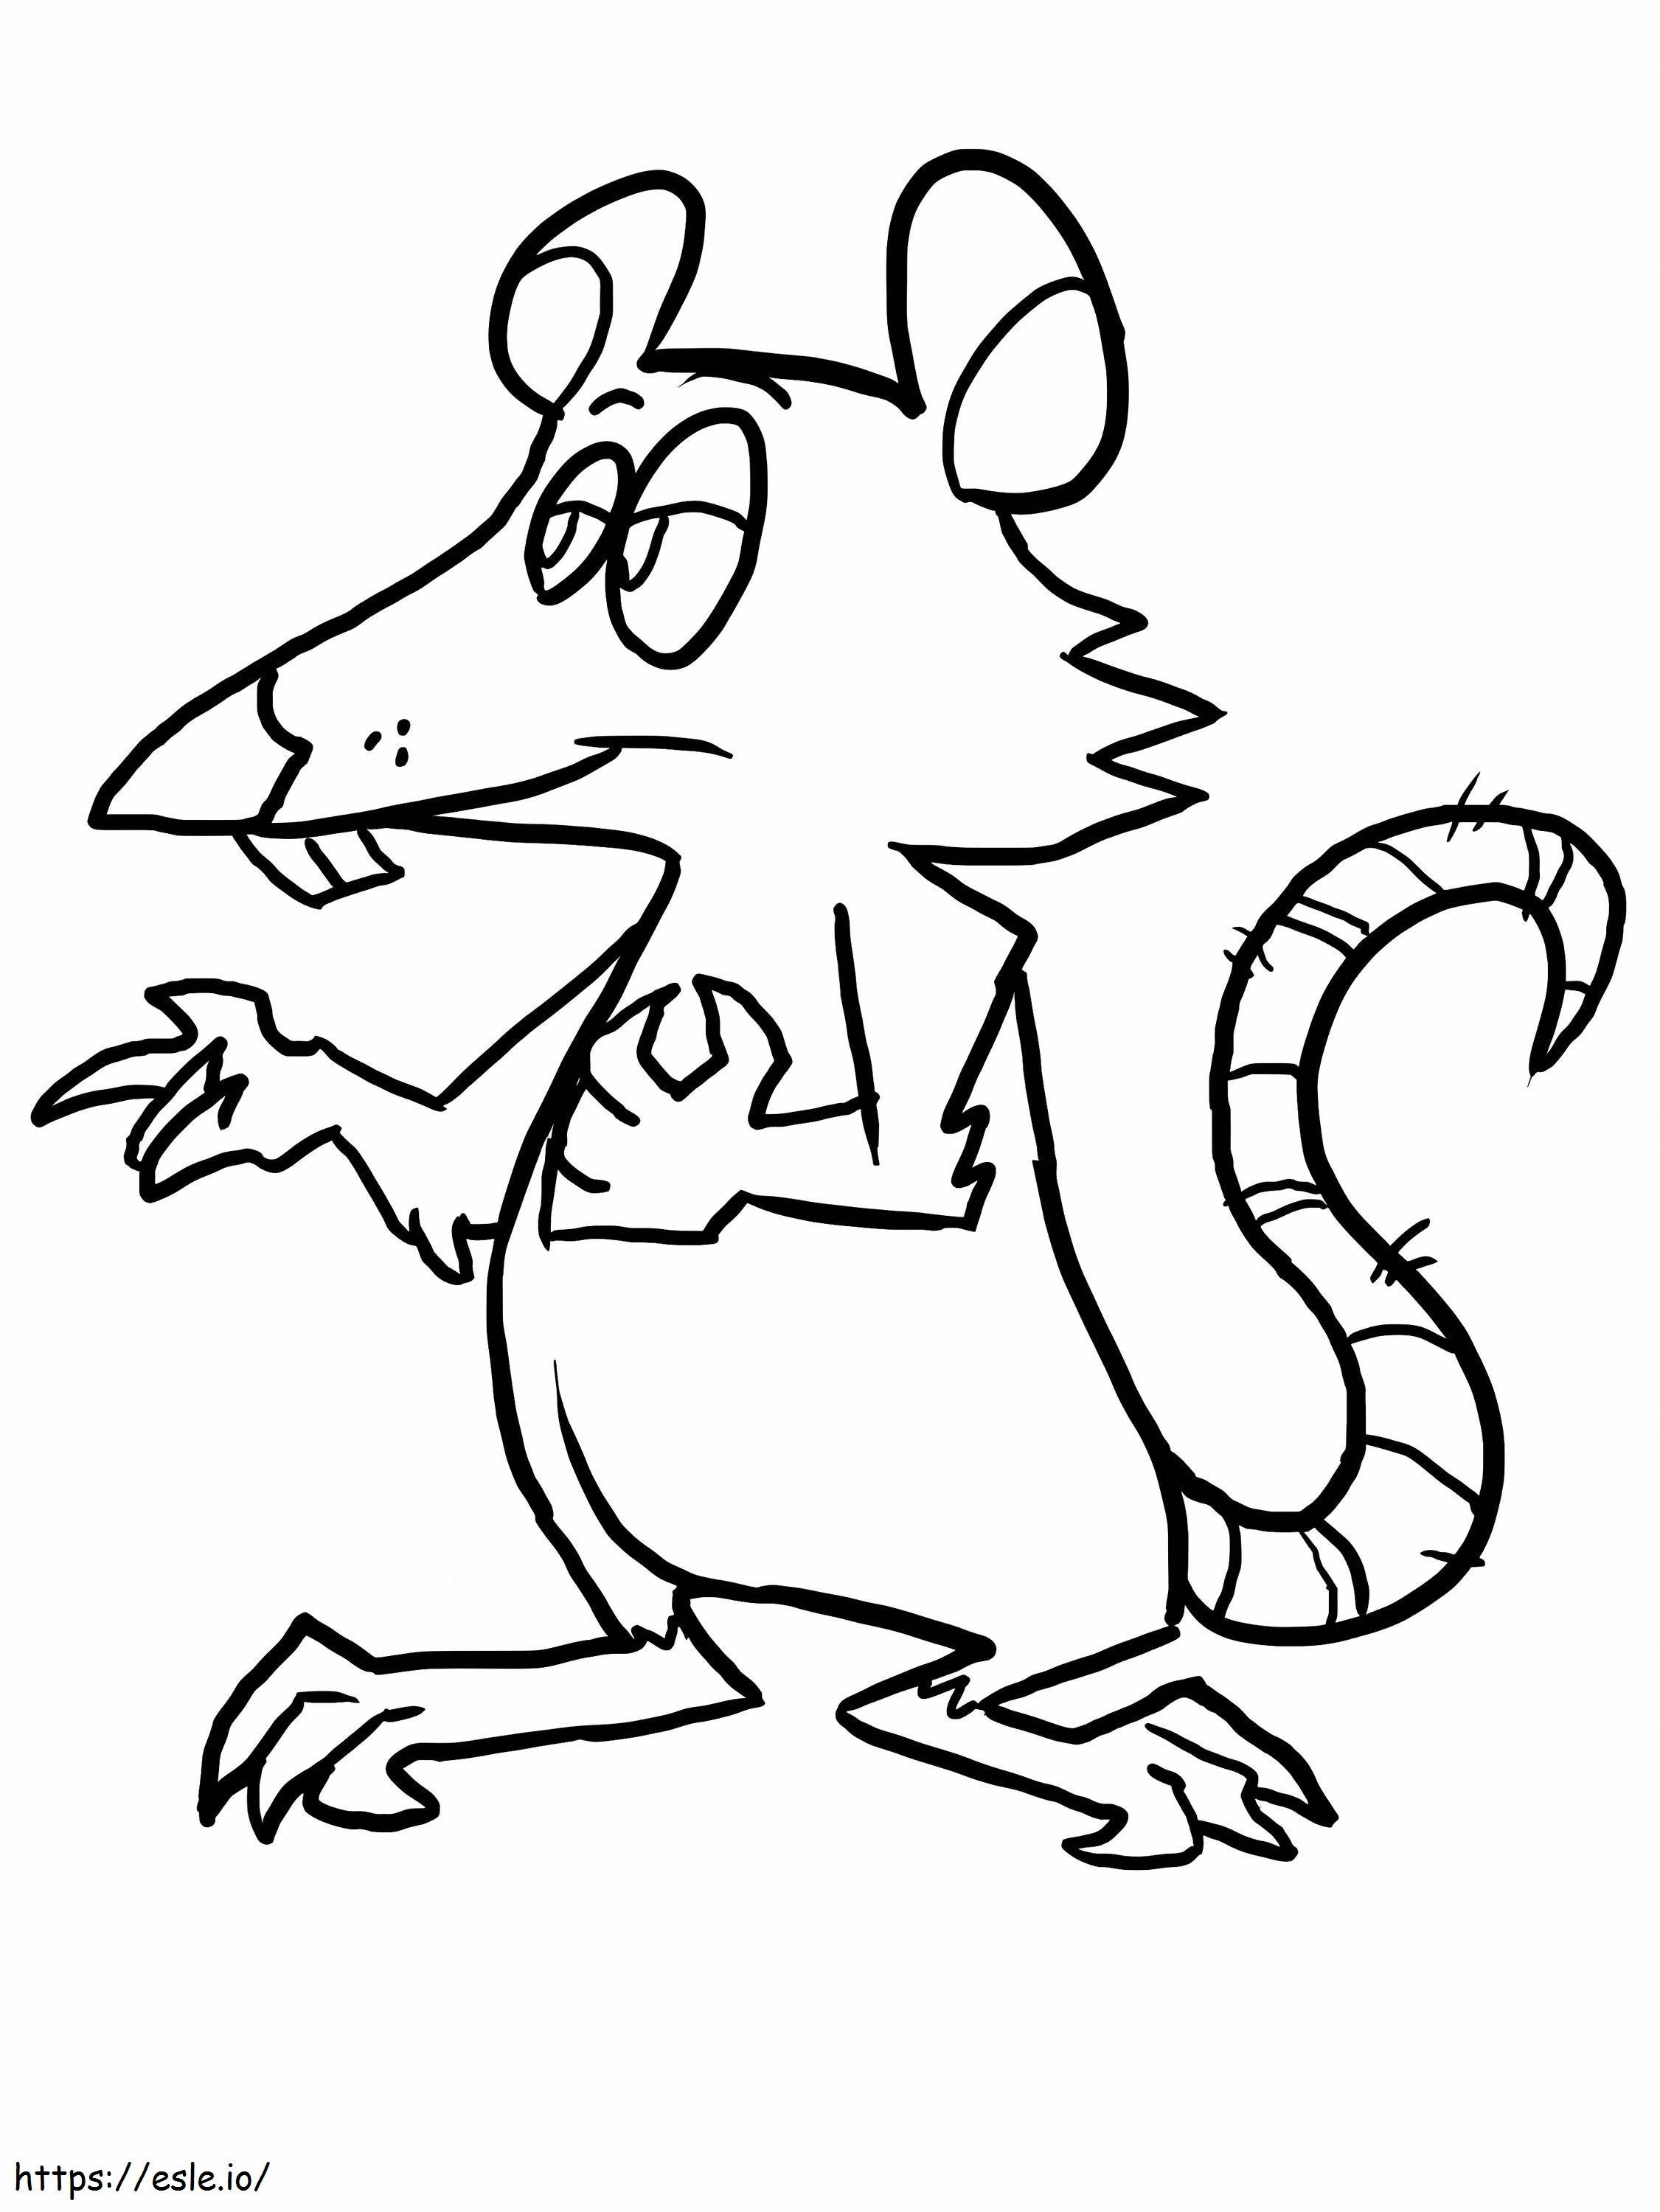 Szczur kreskówka kolorowanka